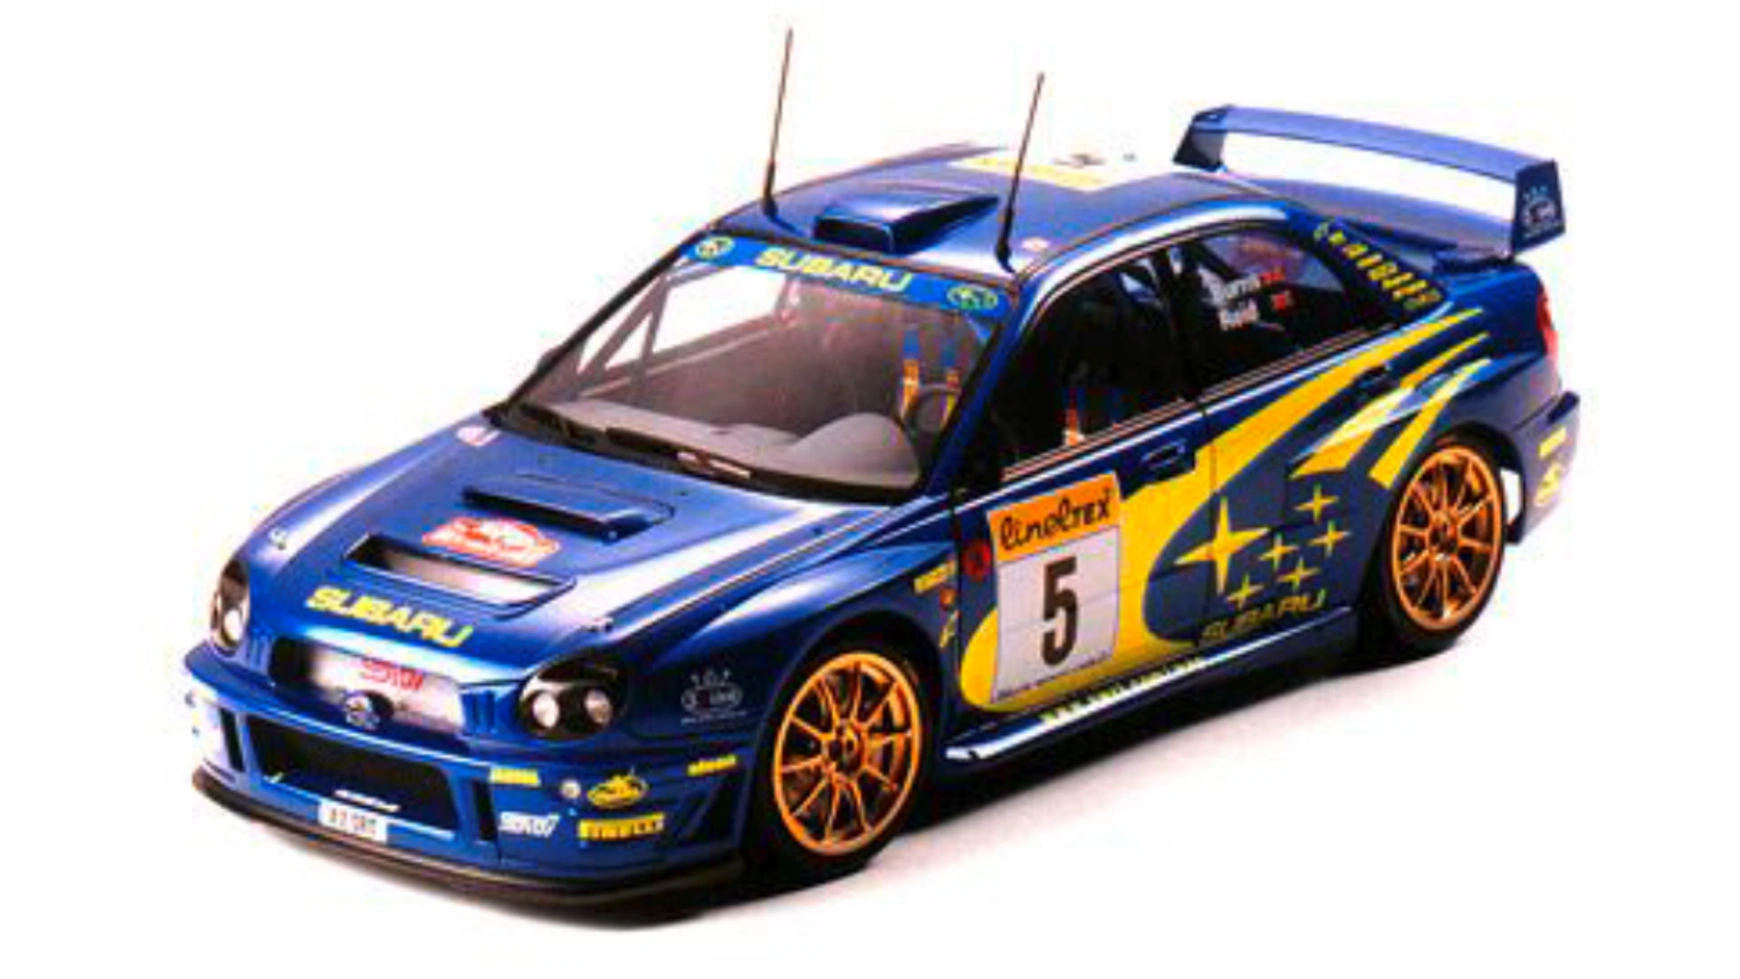 Tamiya 1:24 Subaru Impreza WRC 2001 beemax сборная модель peugeot 306 maxi evo2 98 monte carlo rally class winner 1 24